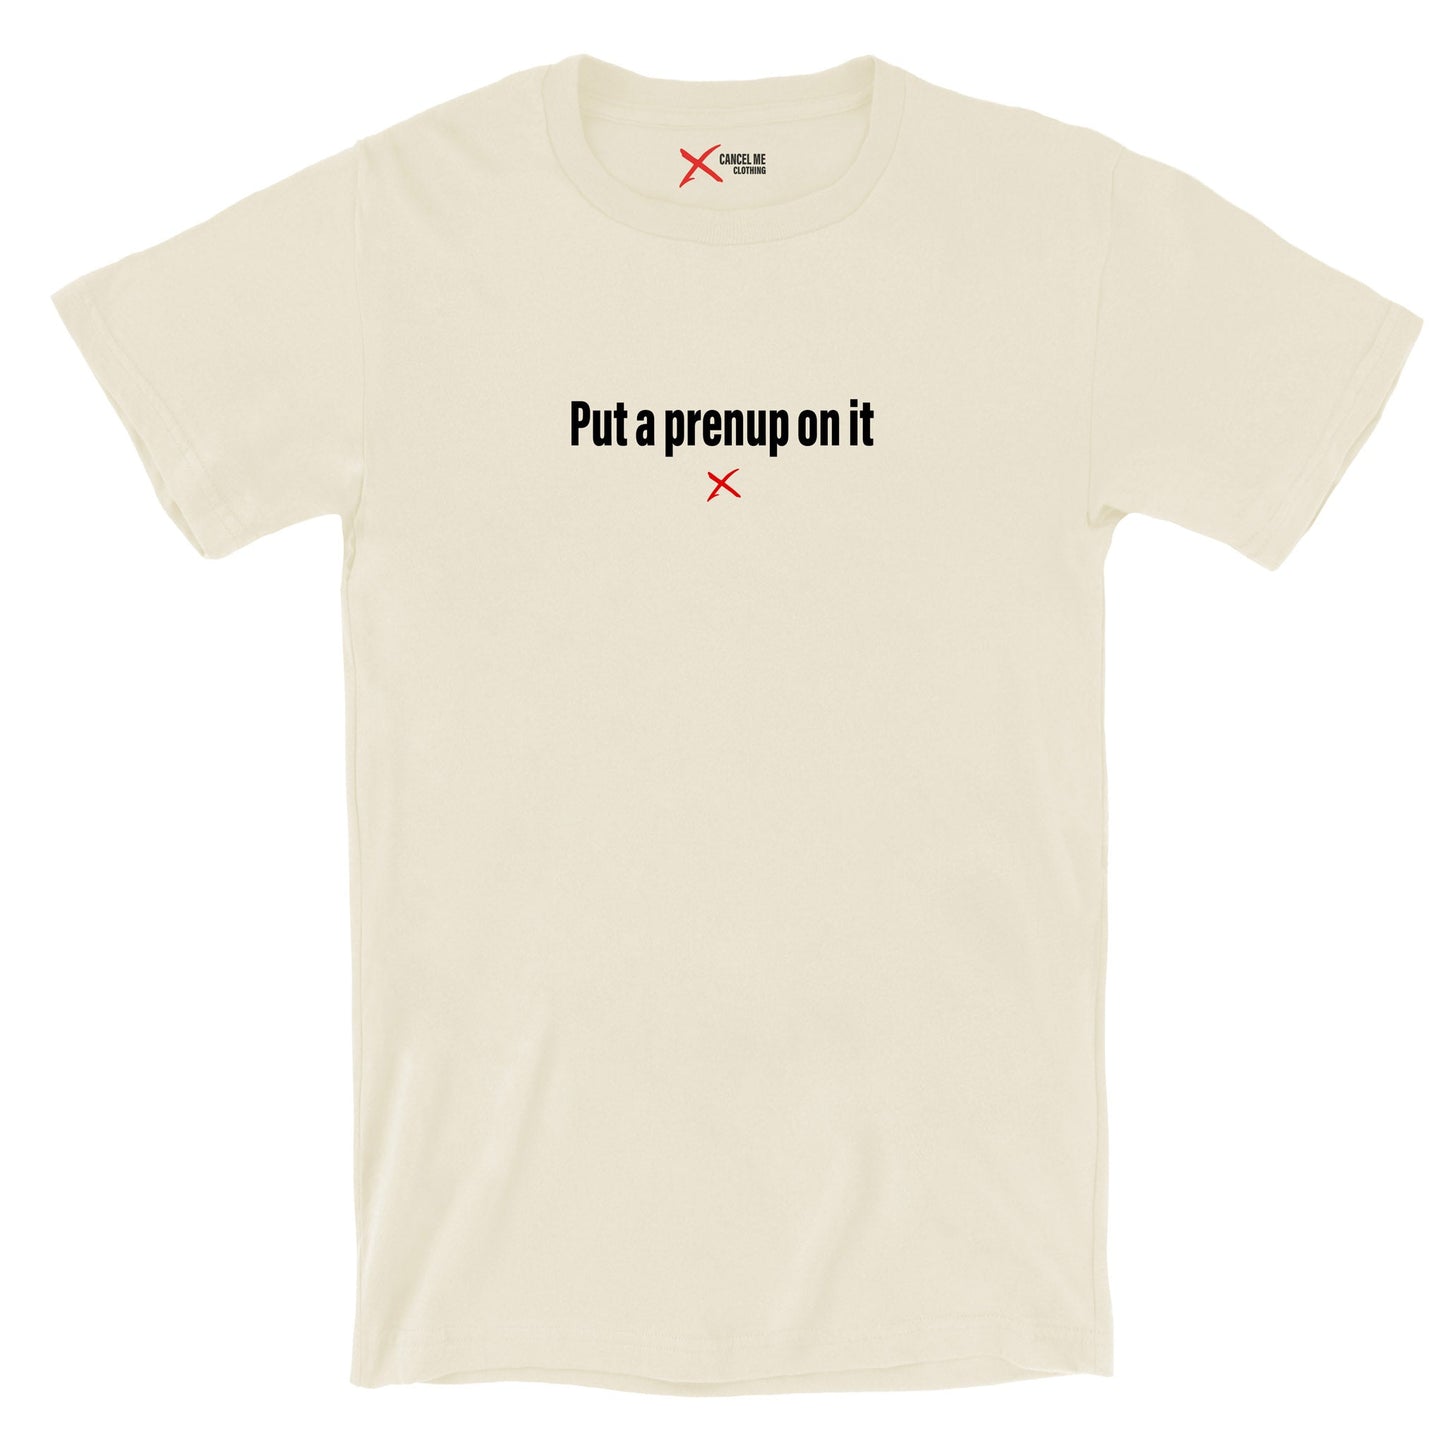 Put a prenup on it - Shirt